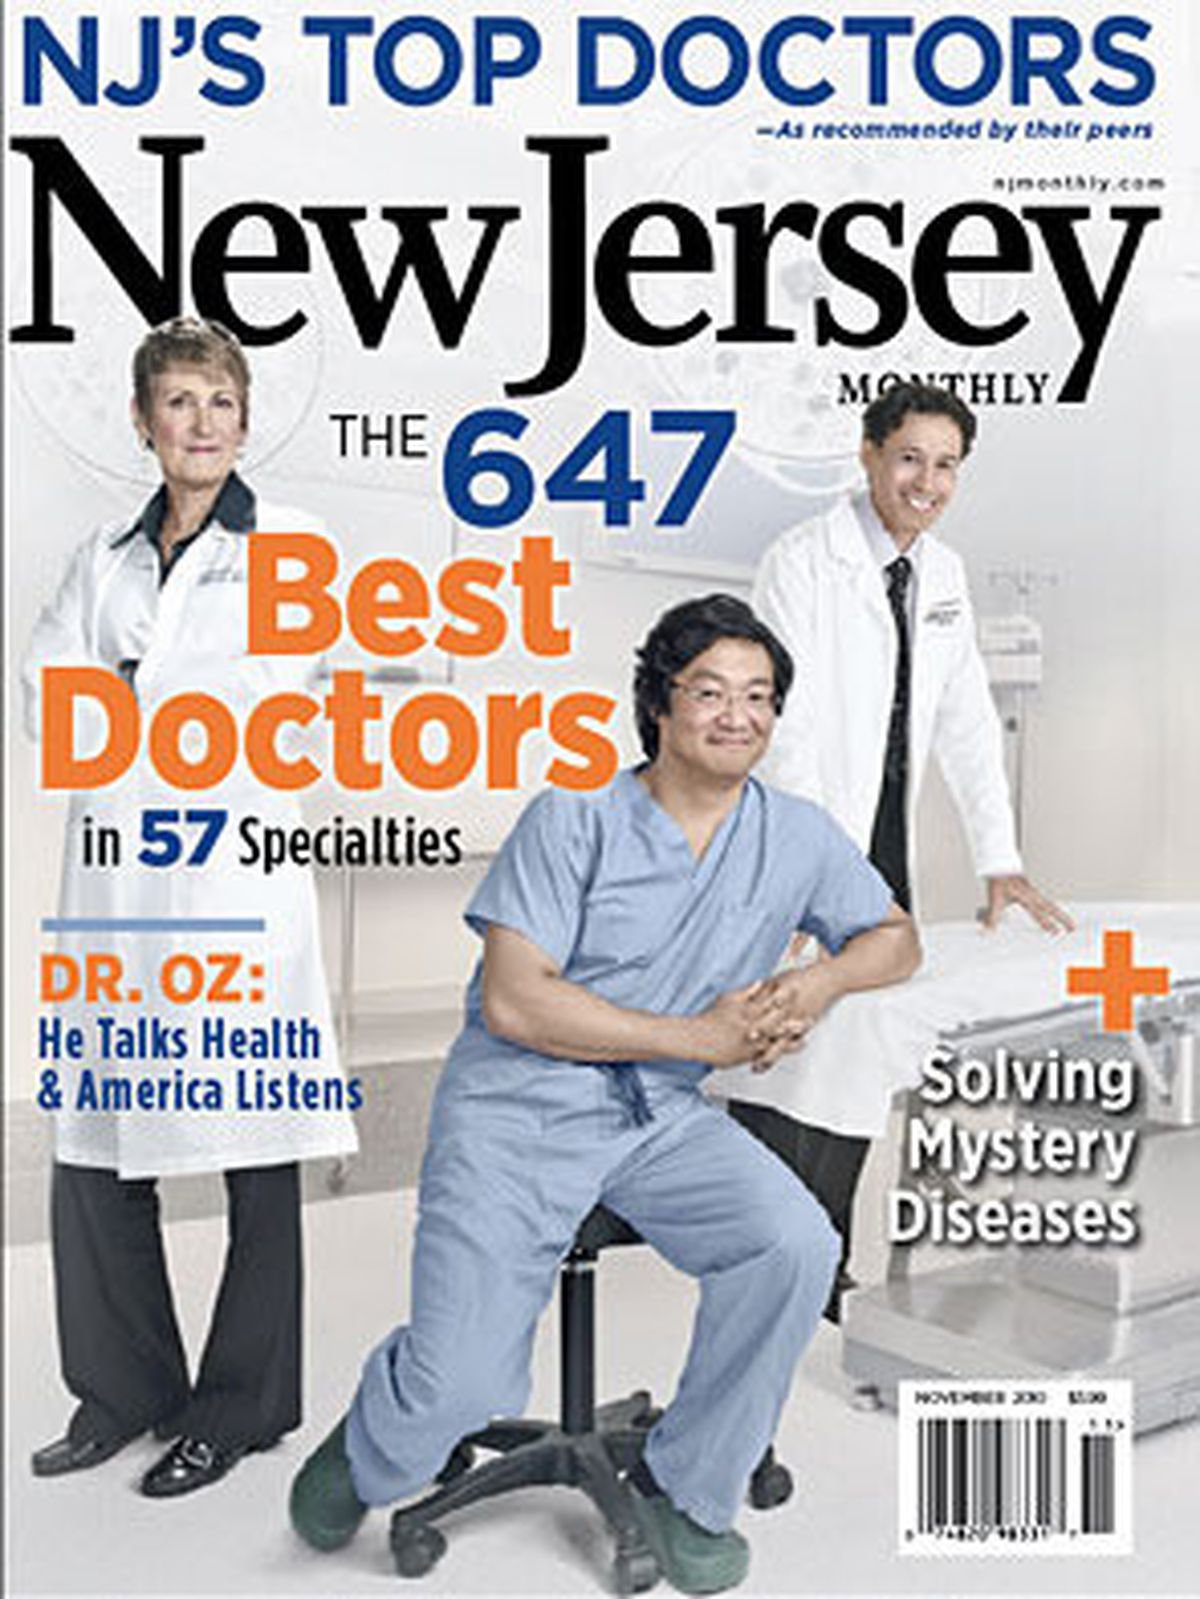 New Jersey's Top Doctors award for Dr. DiBernardo